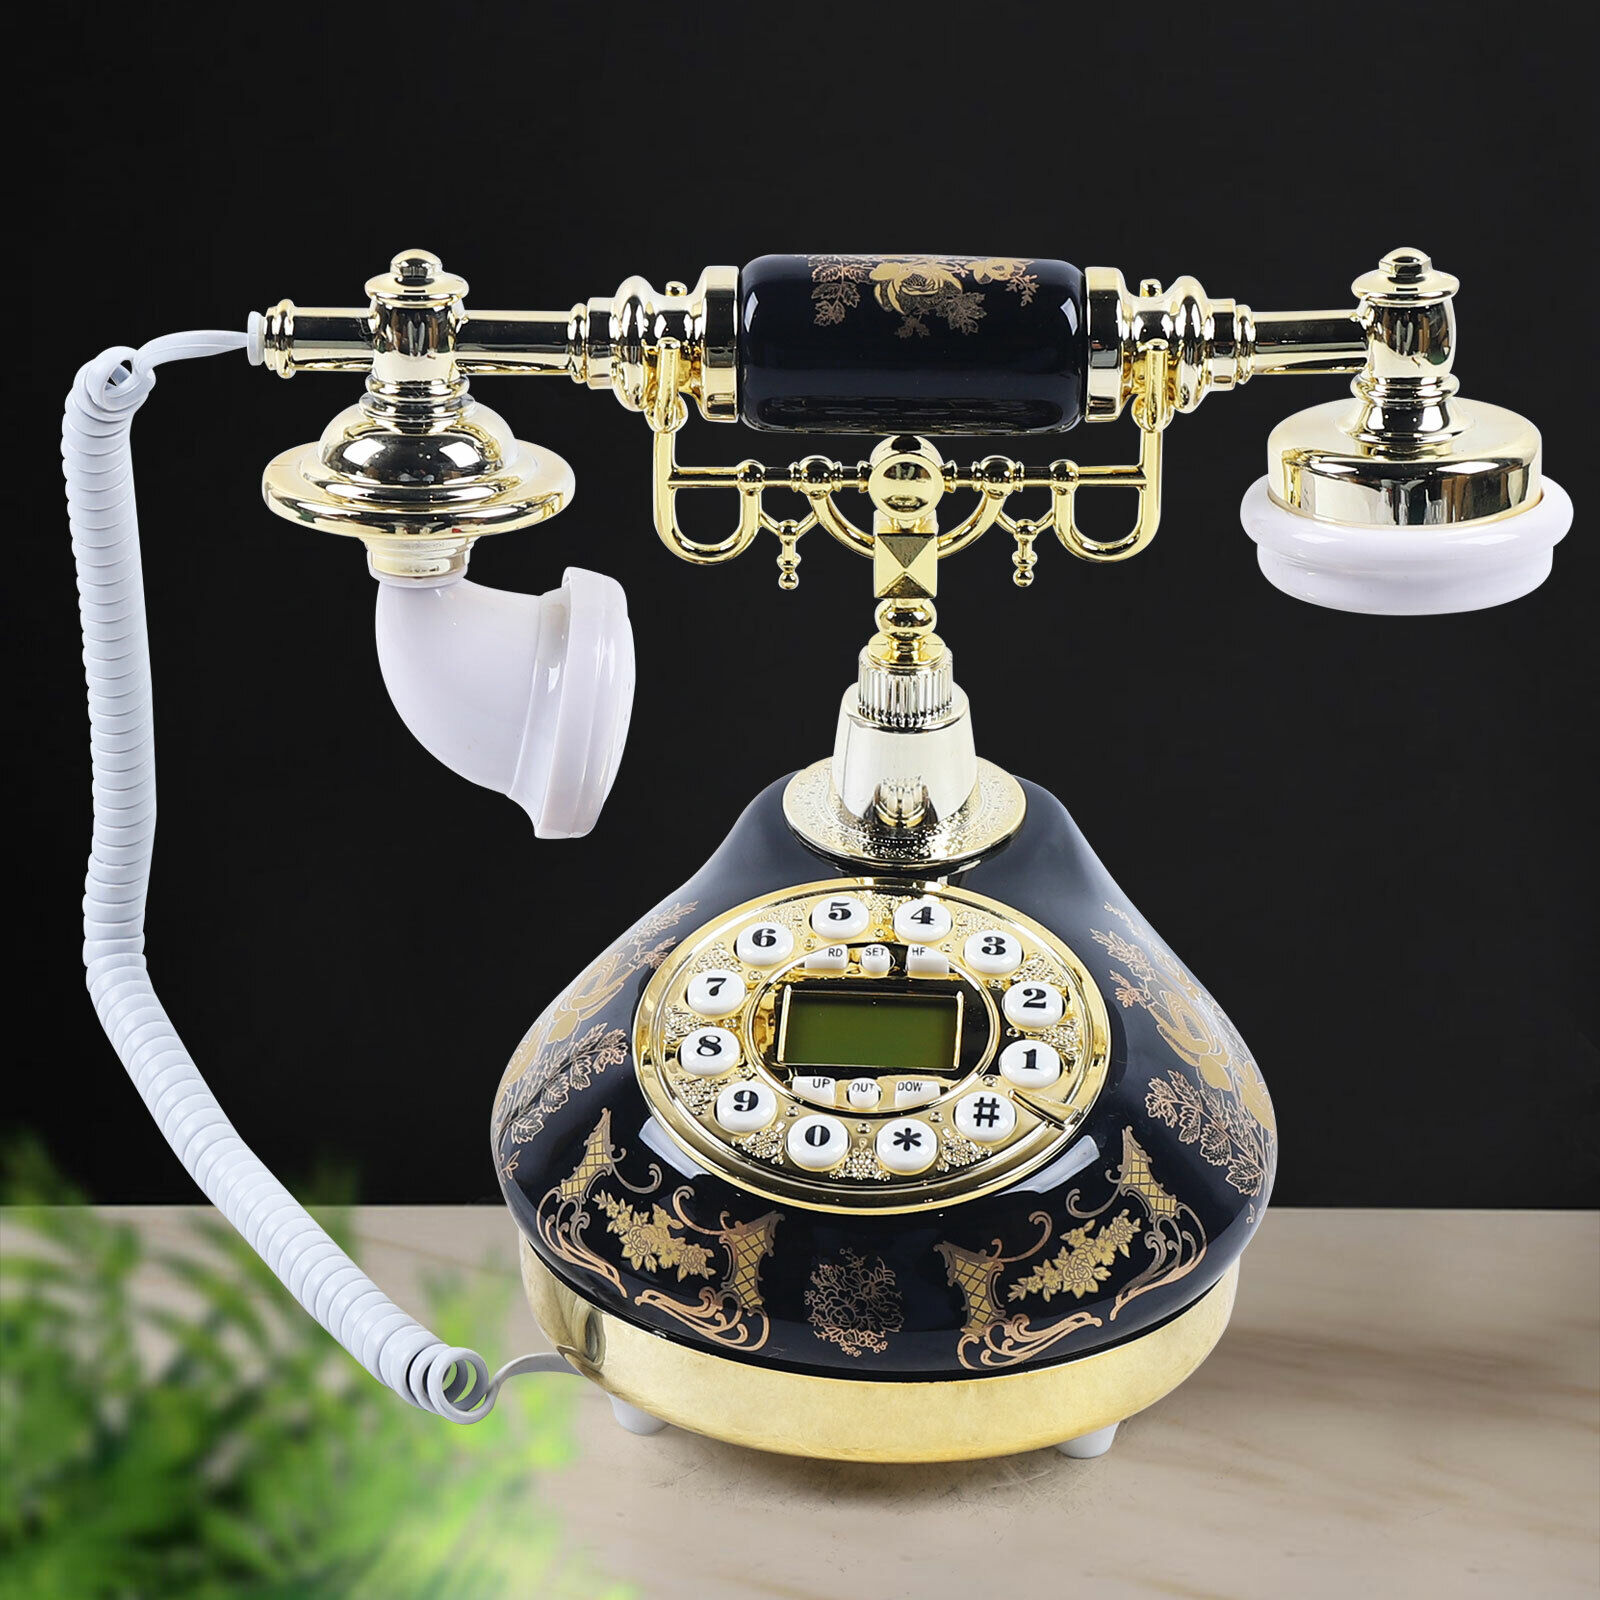 Vintage Ceramic Telephone Push Button Phone Old Fashioned Desk European Landline